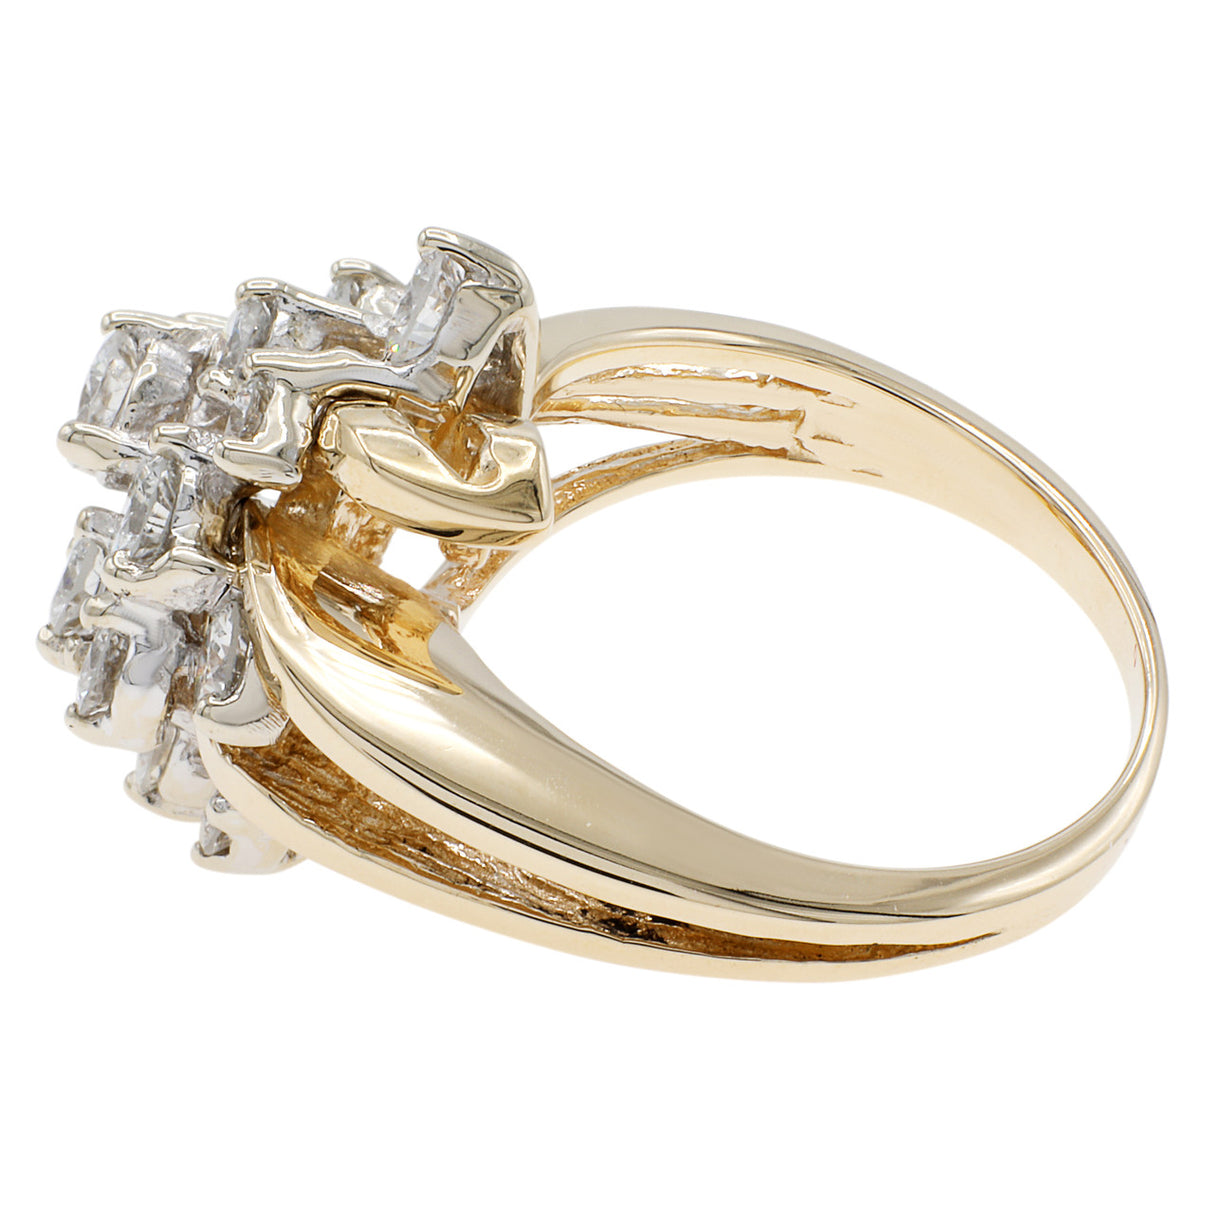 14K Yellow Gold 1.73 Carat Diamond Cluster Ring